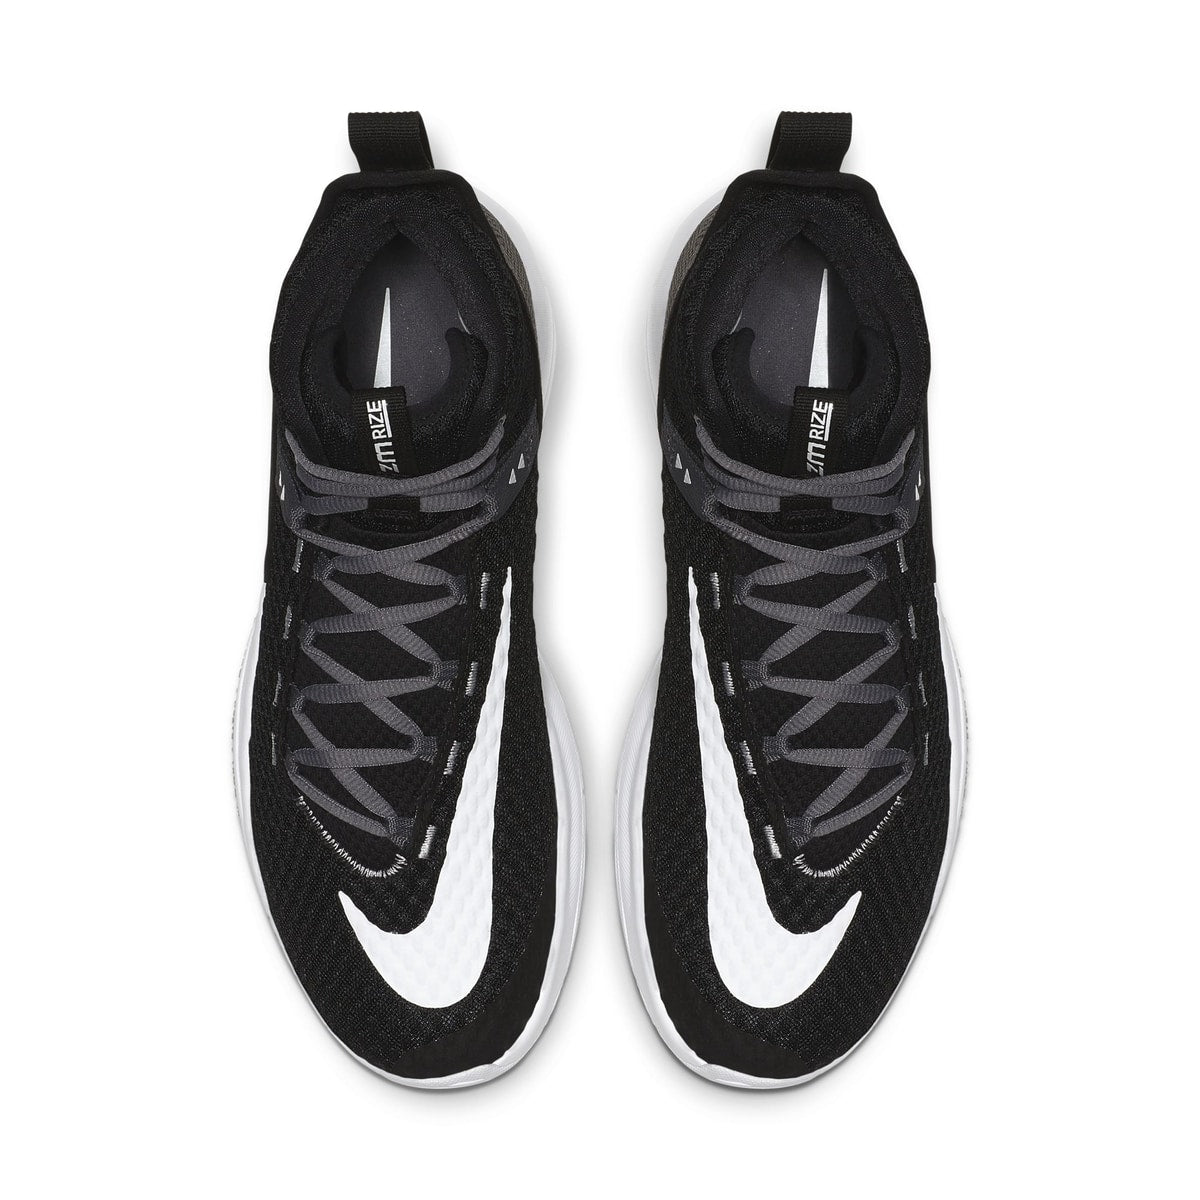 Nike Zoom Rise TB Basketball Shoe - Black/White